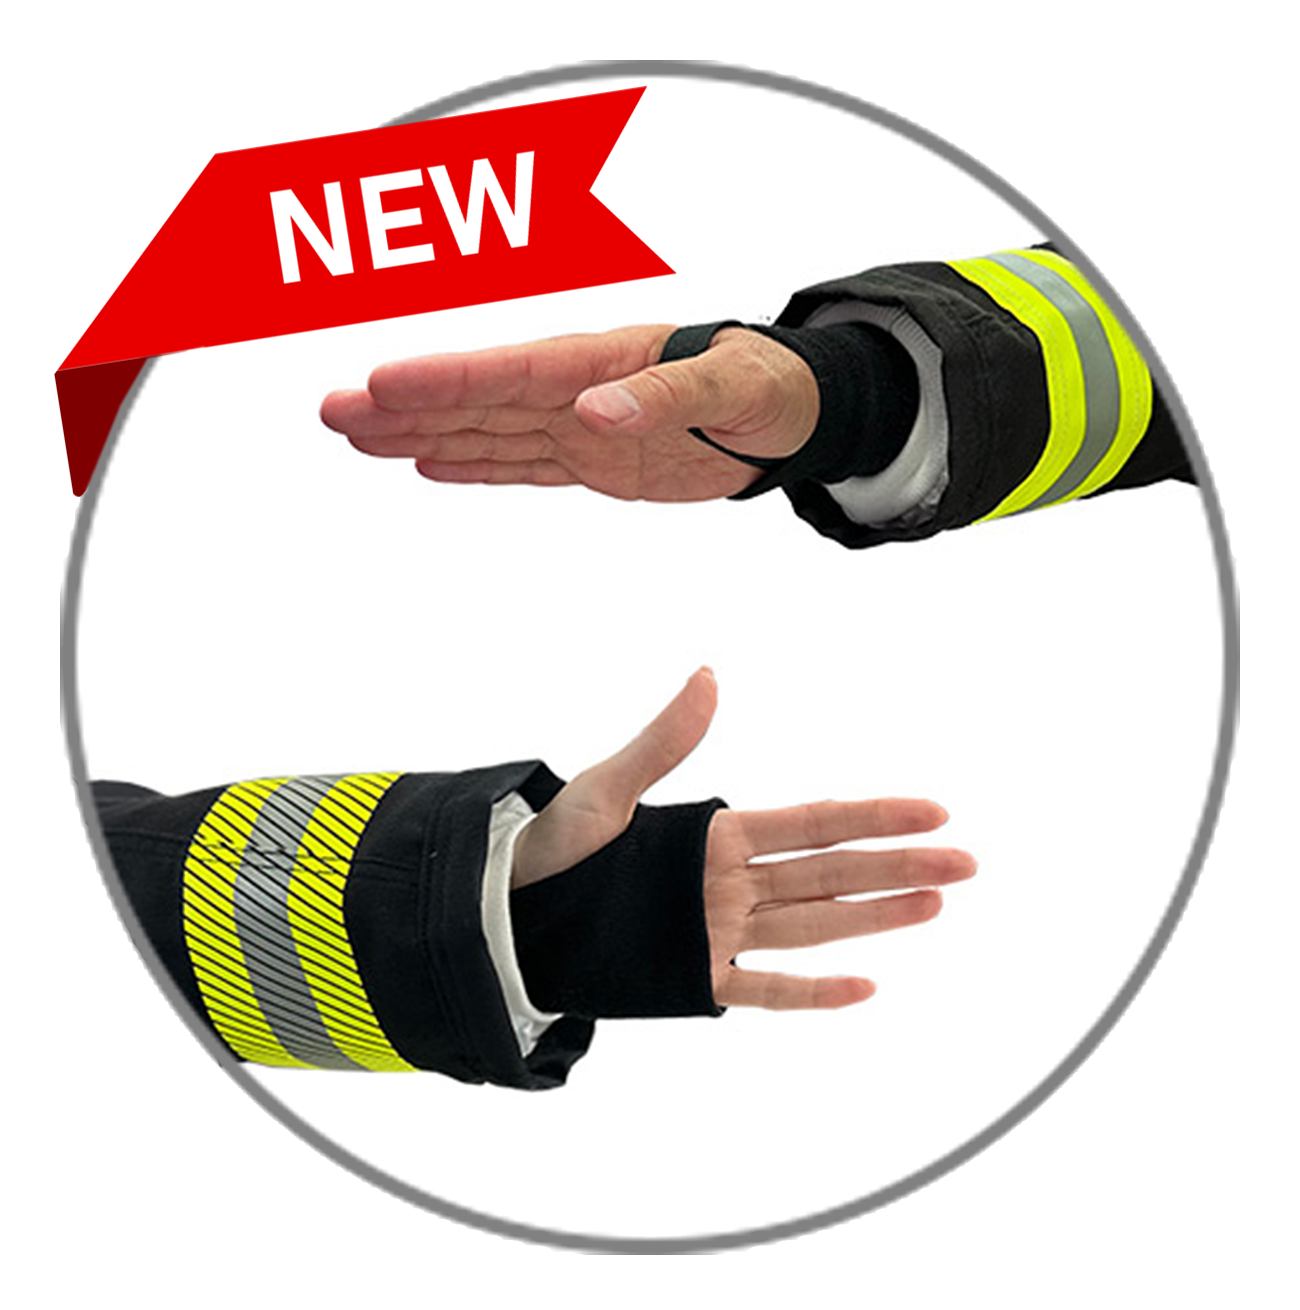 New Nomex Wrist Guard Options from Ricochet